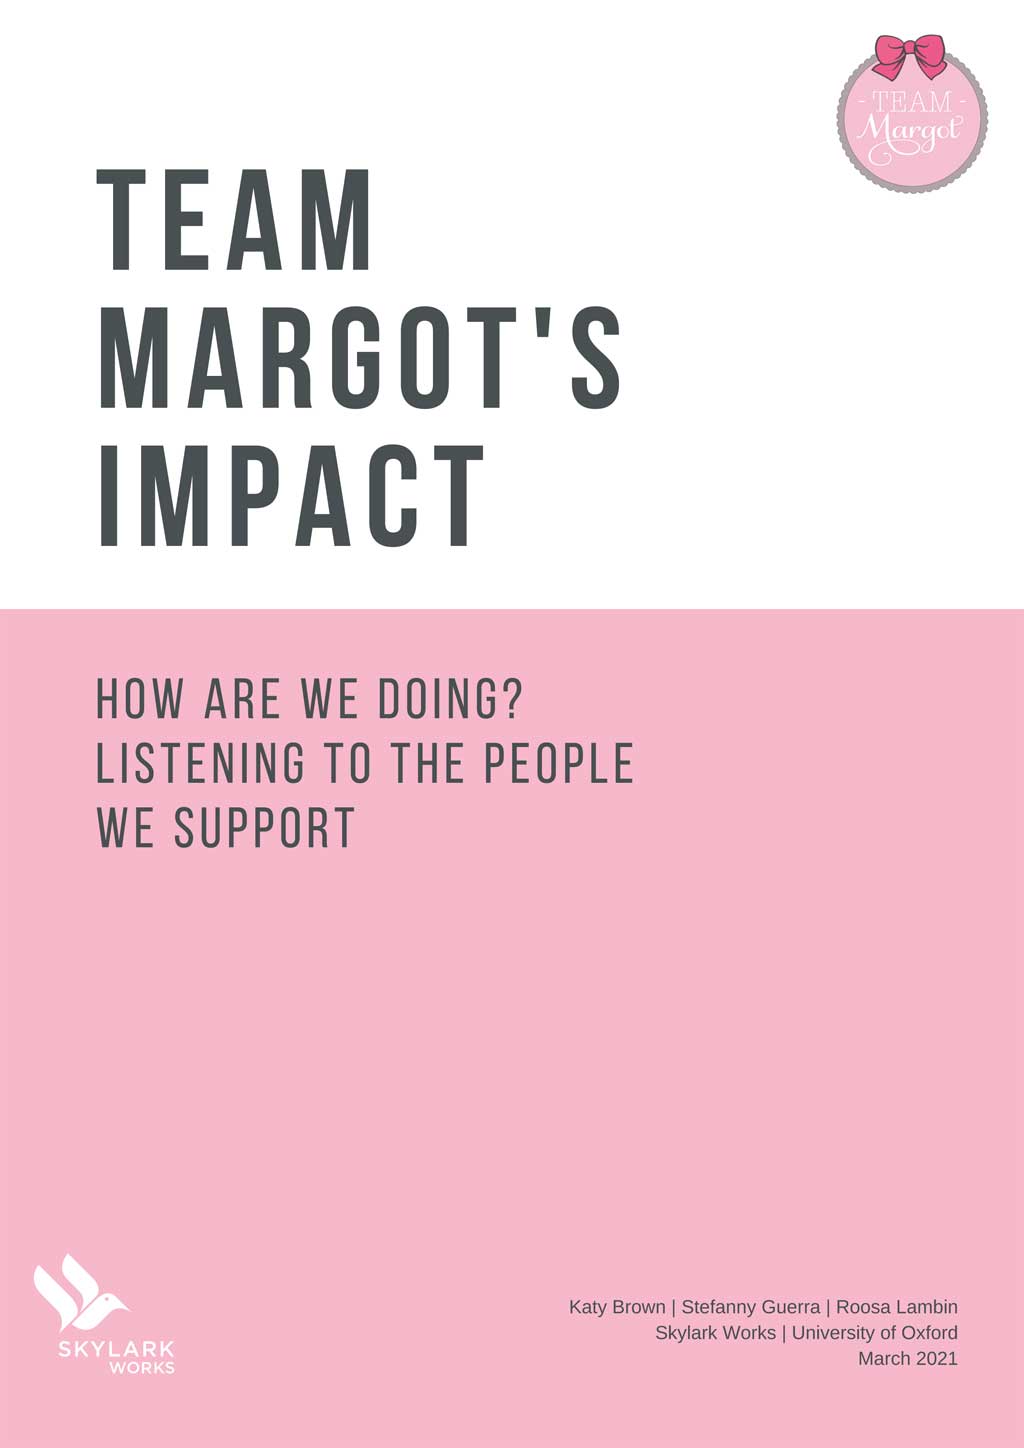 Team Margots impact